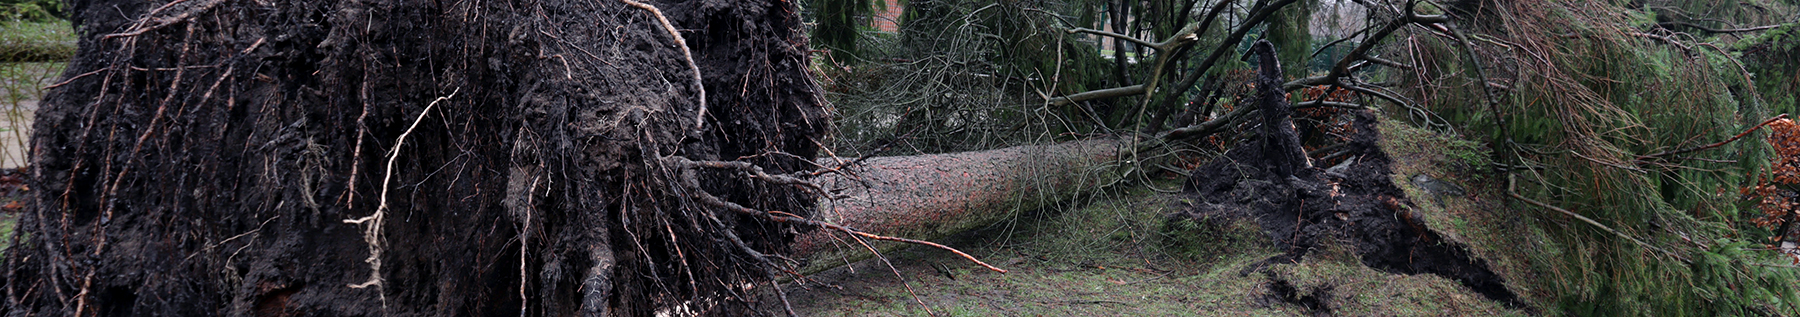 tree fallen in windstorm